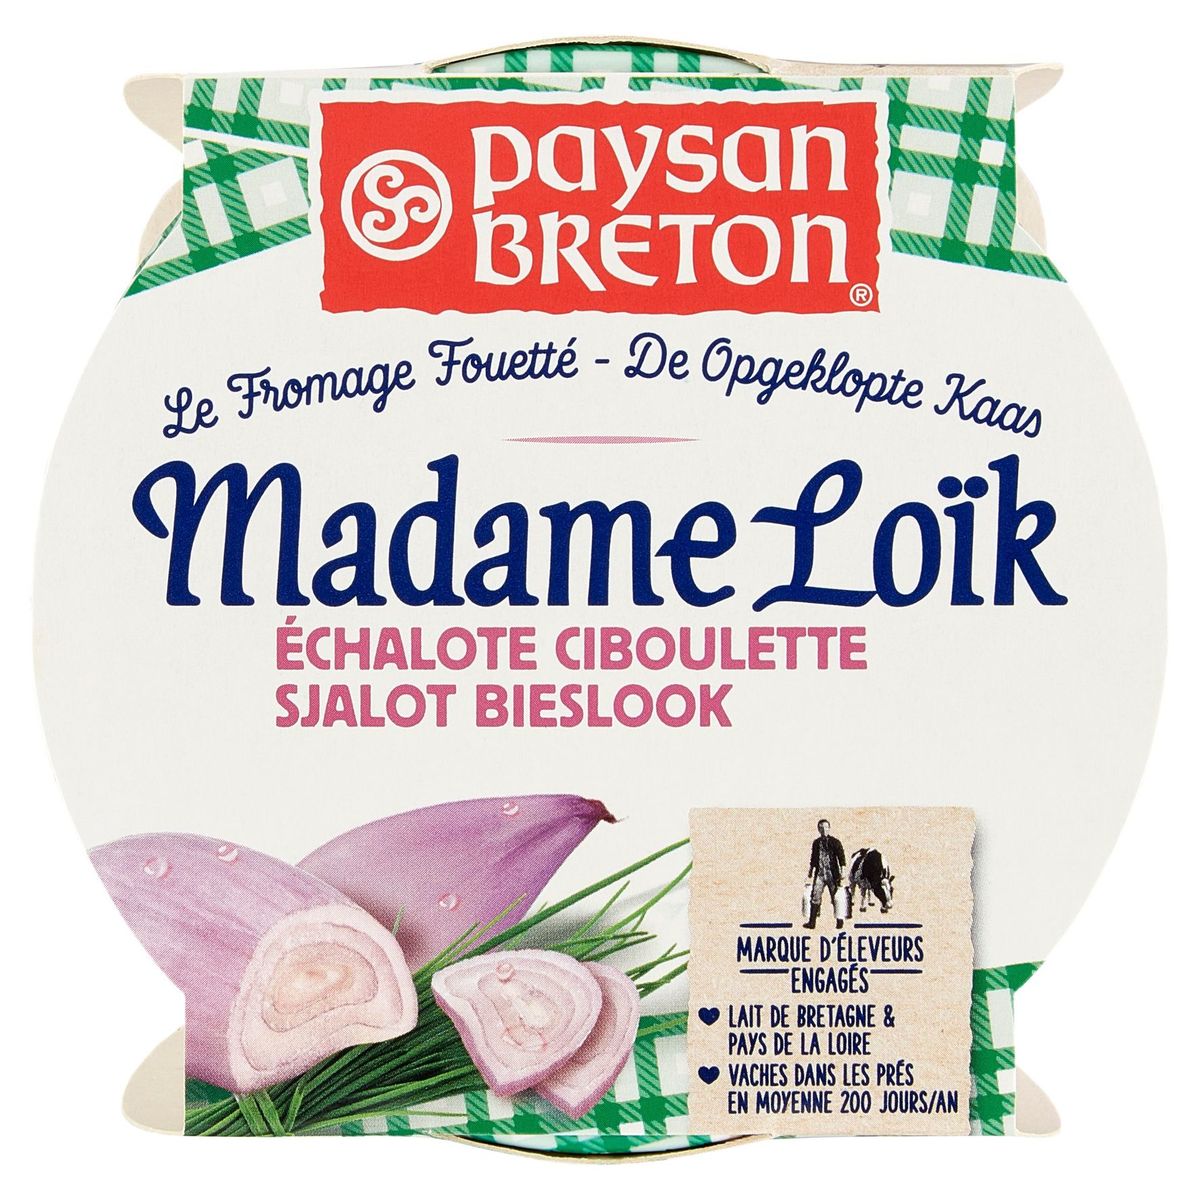 Paysan Breton Le Fromage Fouetté Madame Loik Echalote Ciboulette 150 g